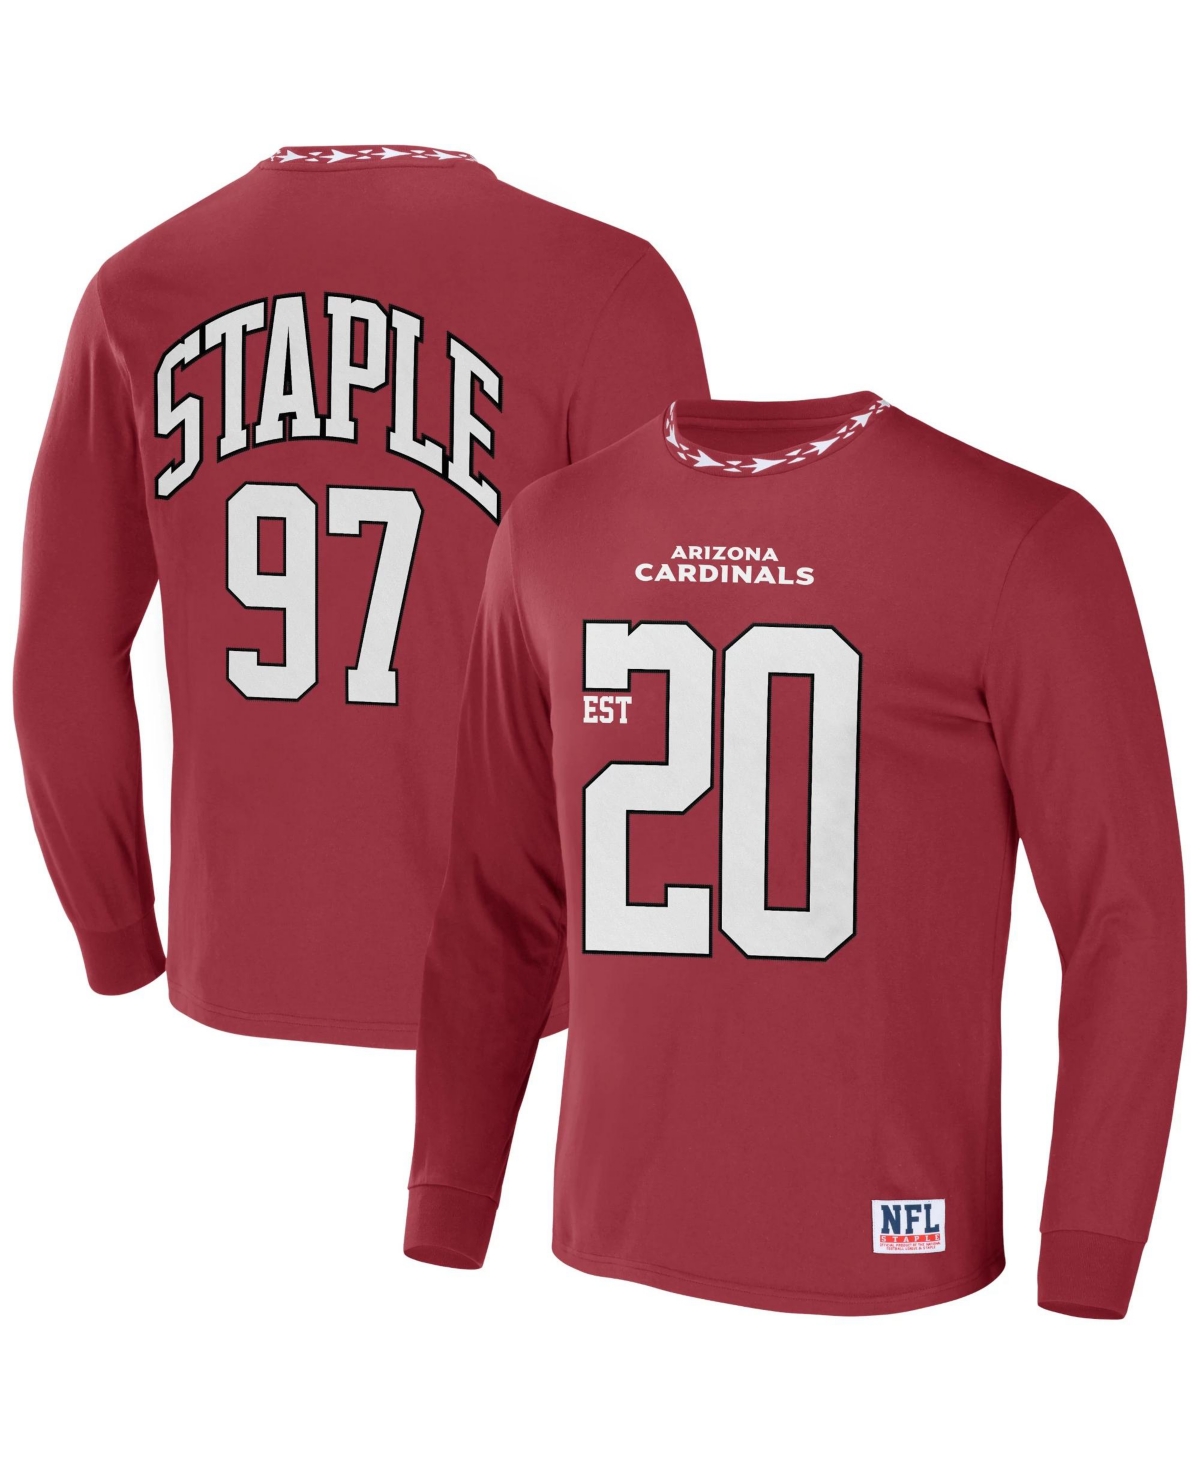 Nfl Properties Men's Nfl X Staple Red Arizona Cardinals Core Long Sleeve Jersey Style T-shirt